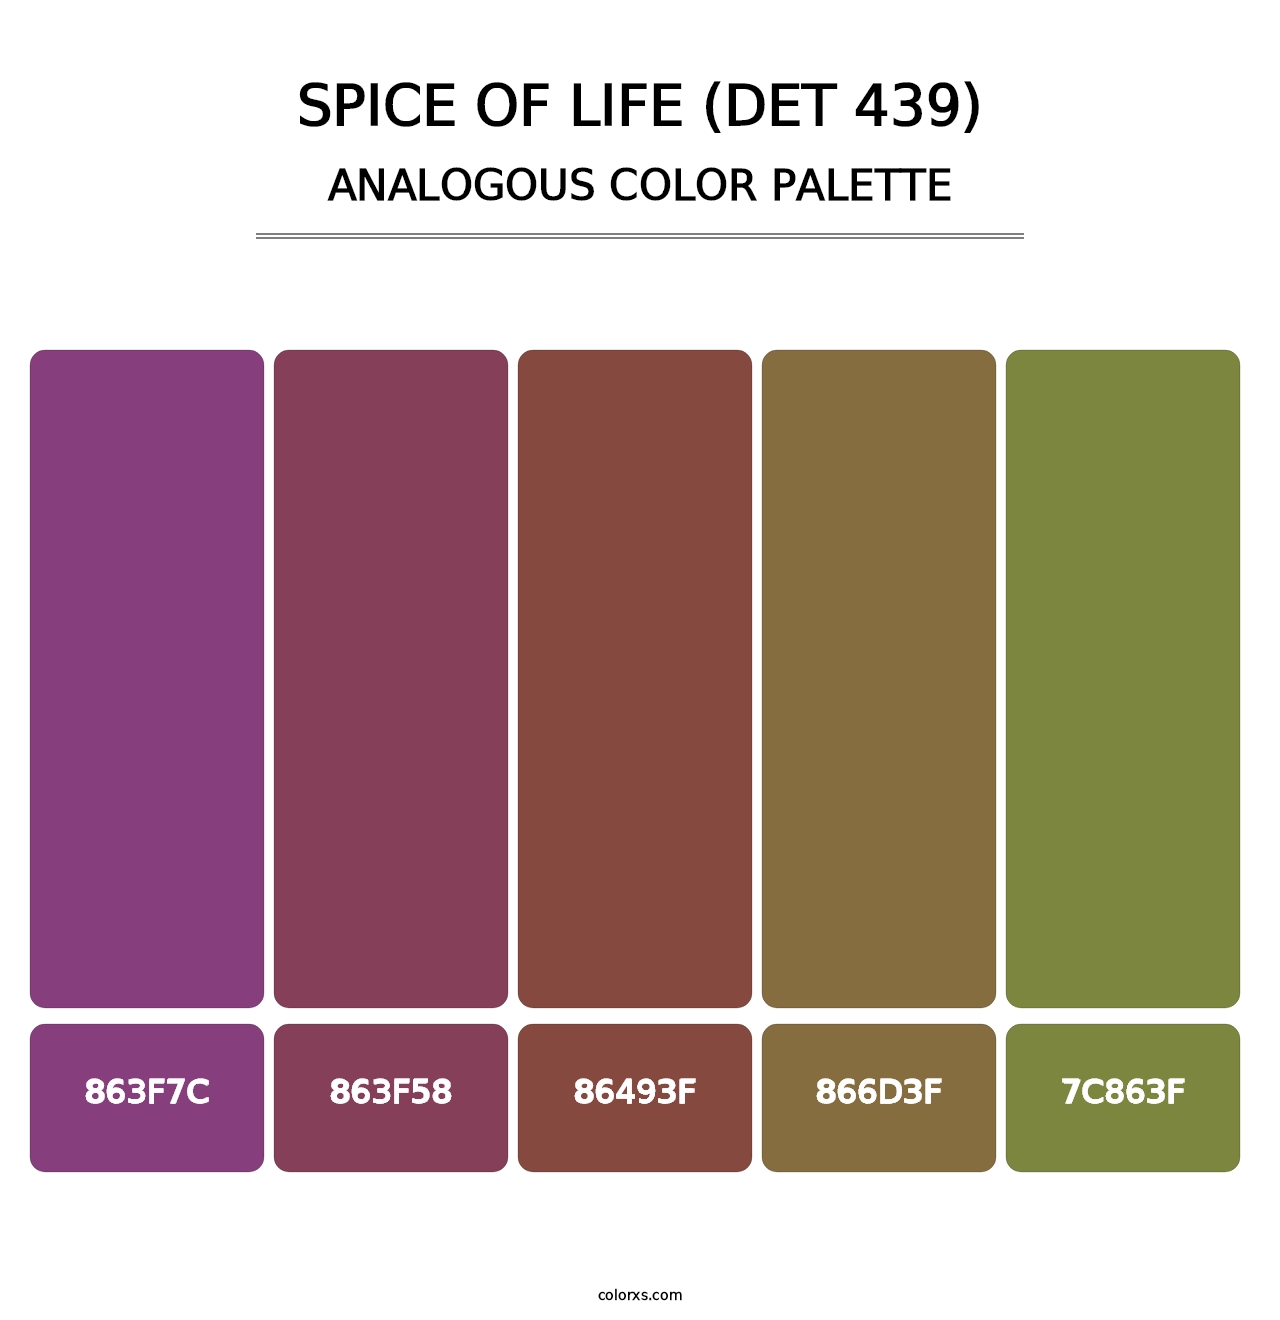 Spice of Life (DET 439) - Analogous Color Palette